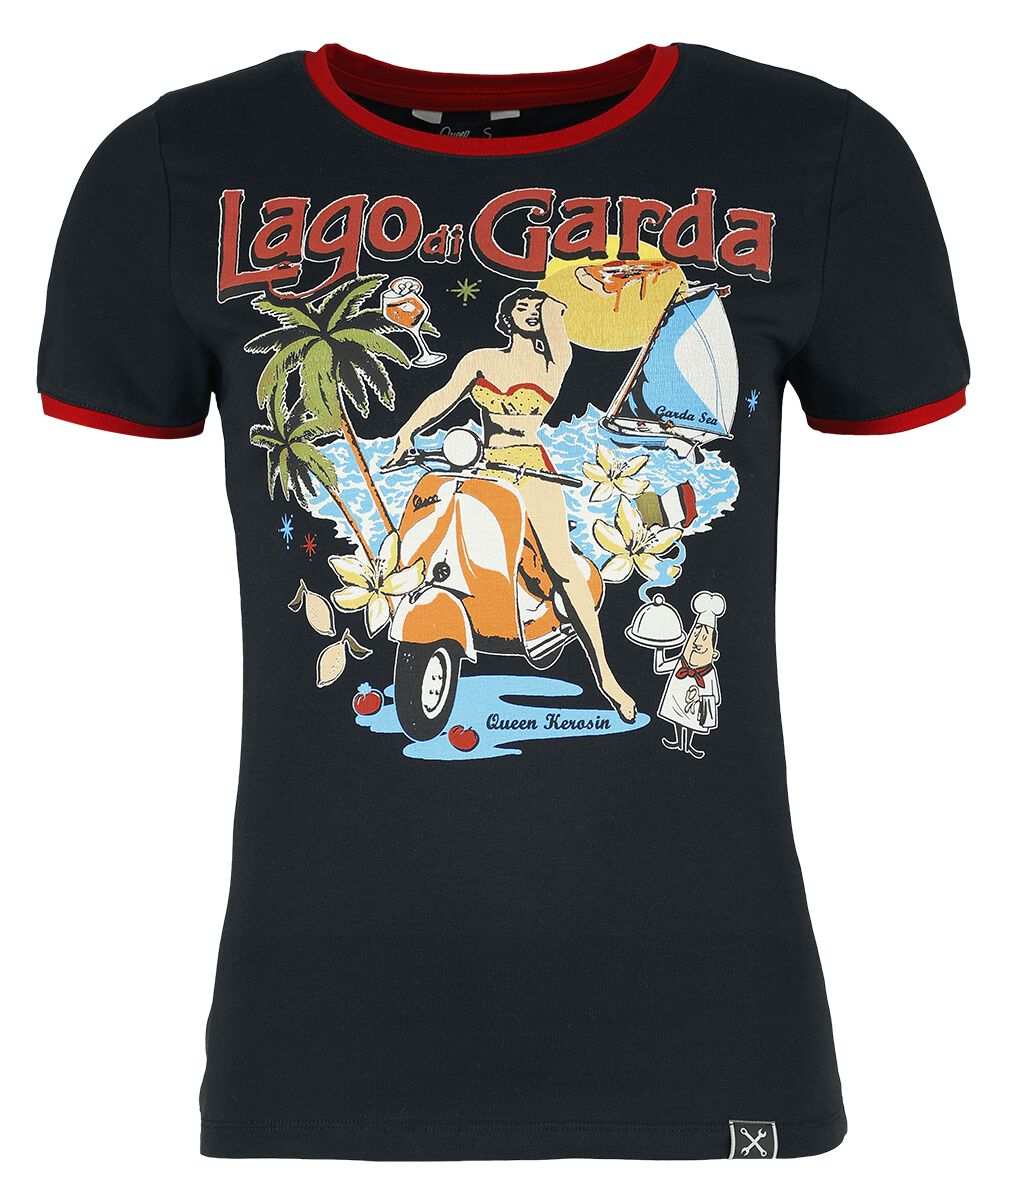 Queen Kerosin - Lago Di Garda - T-Shirt - schwarz|rot